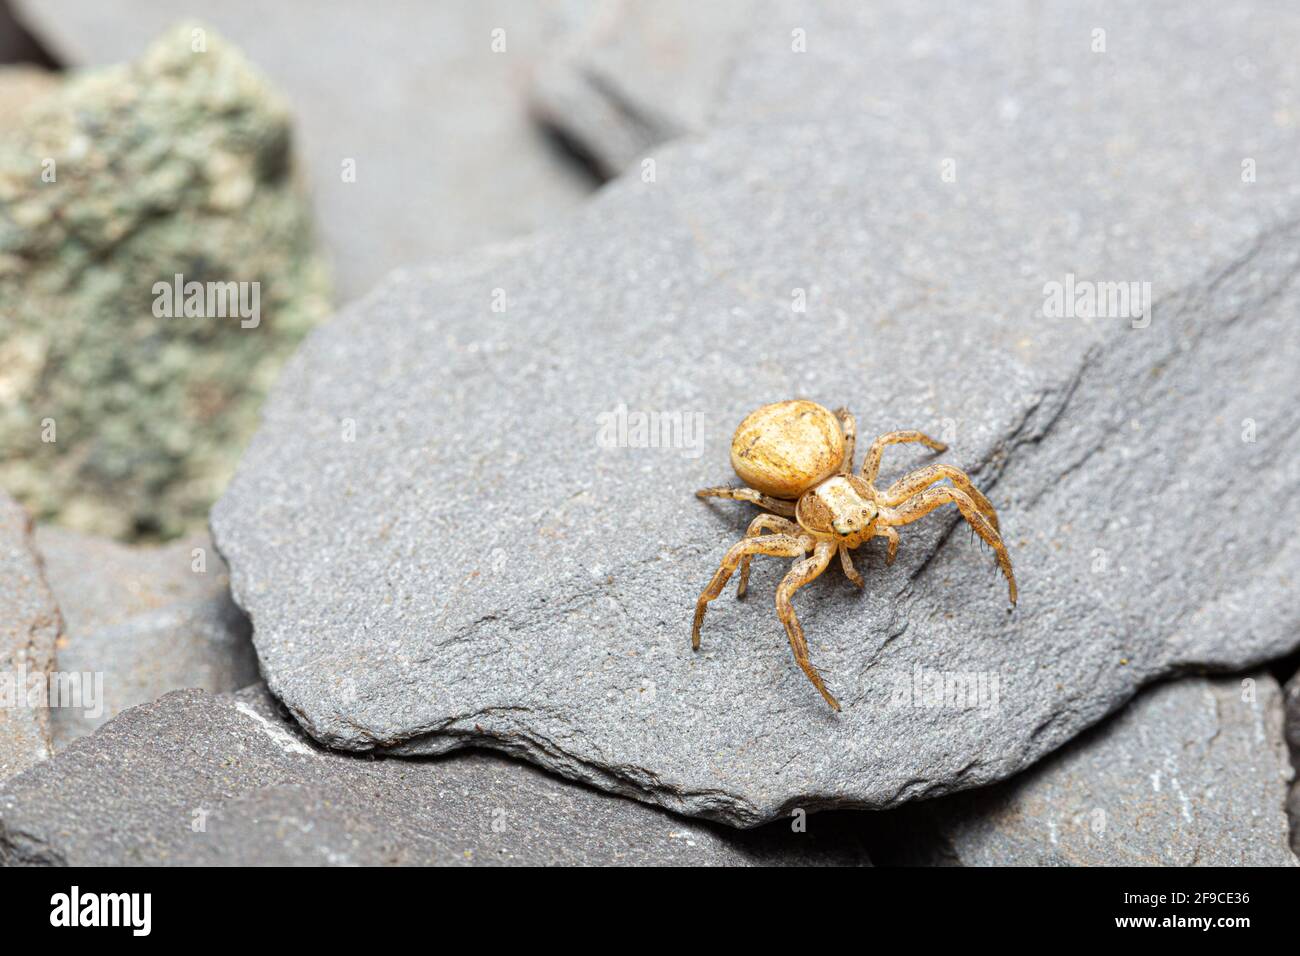 common crab spider / Xysticus sp. Stock Photo